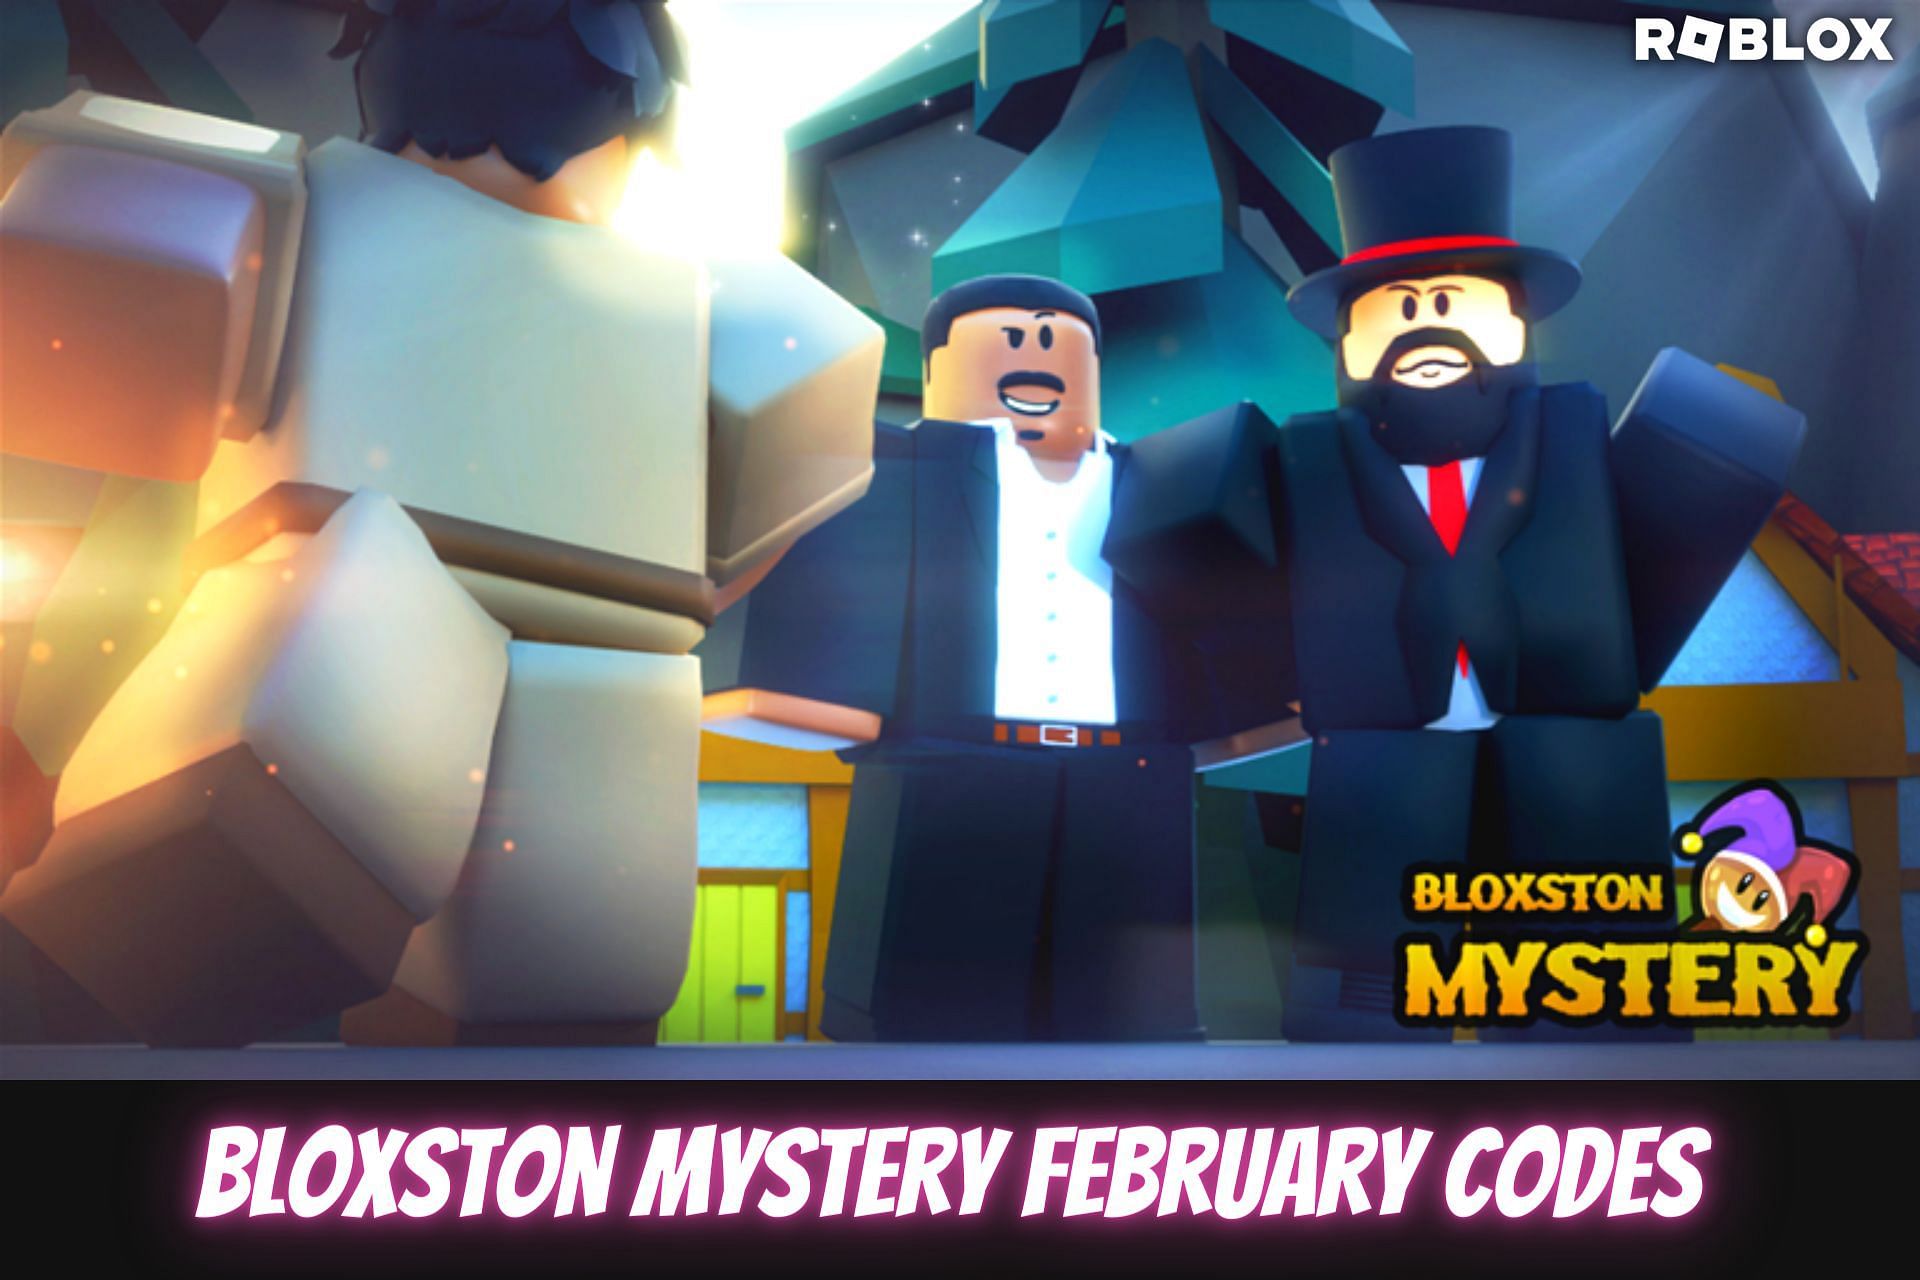 Roblox Bloxston Mystery February codes 